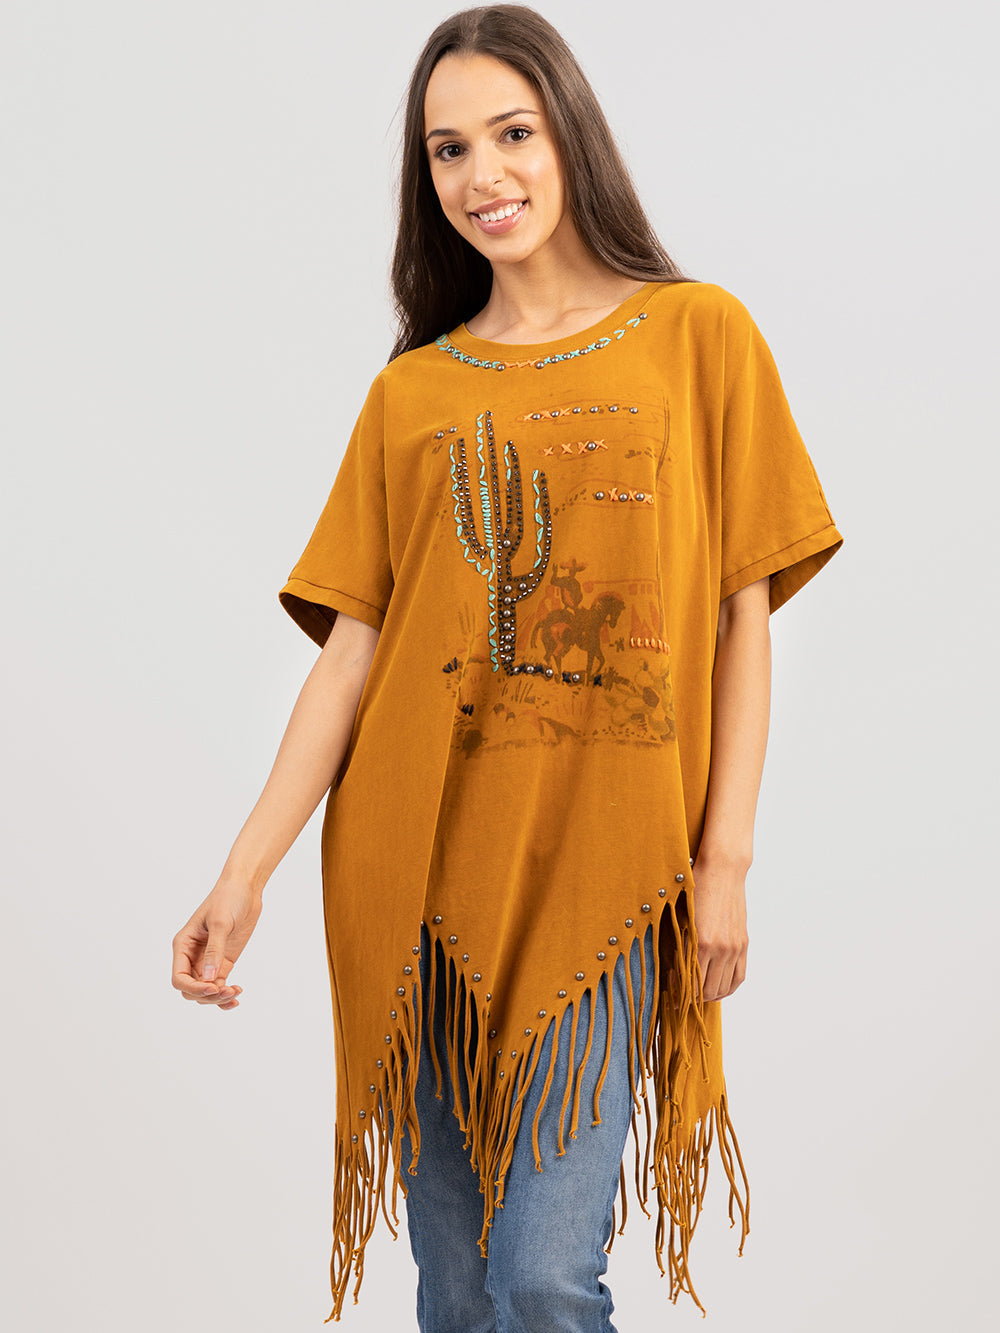 Women's Mineral Wash Desert Graphic Fringe Top - Cowgirl Wear